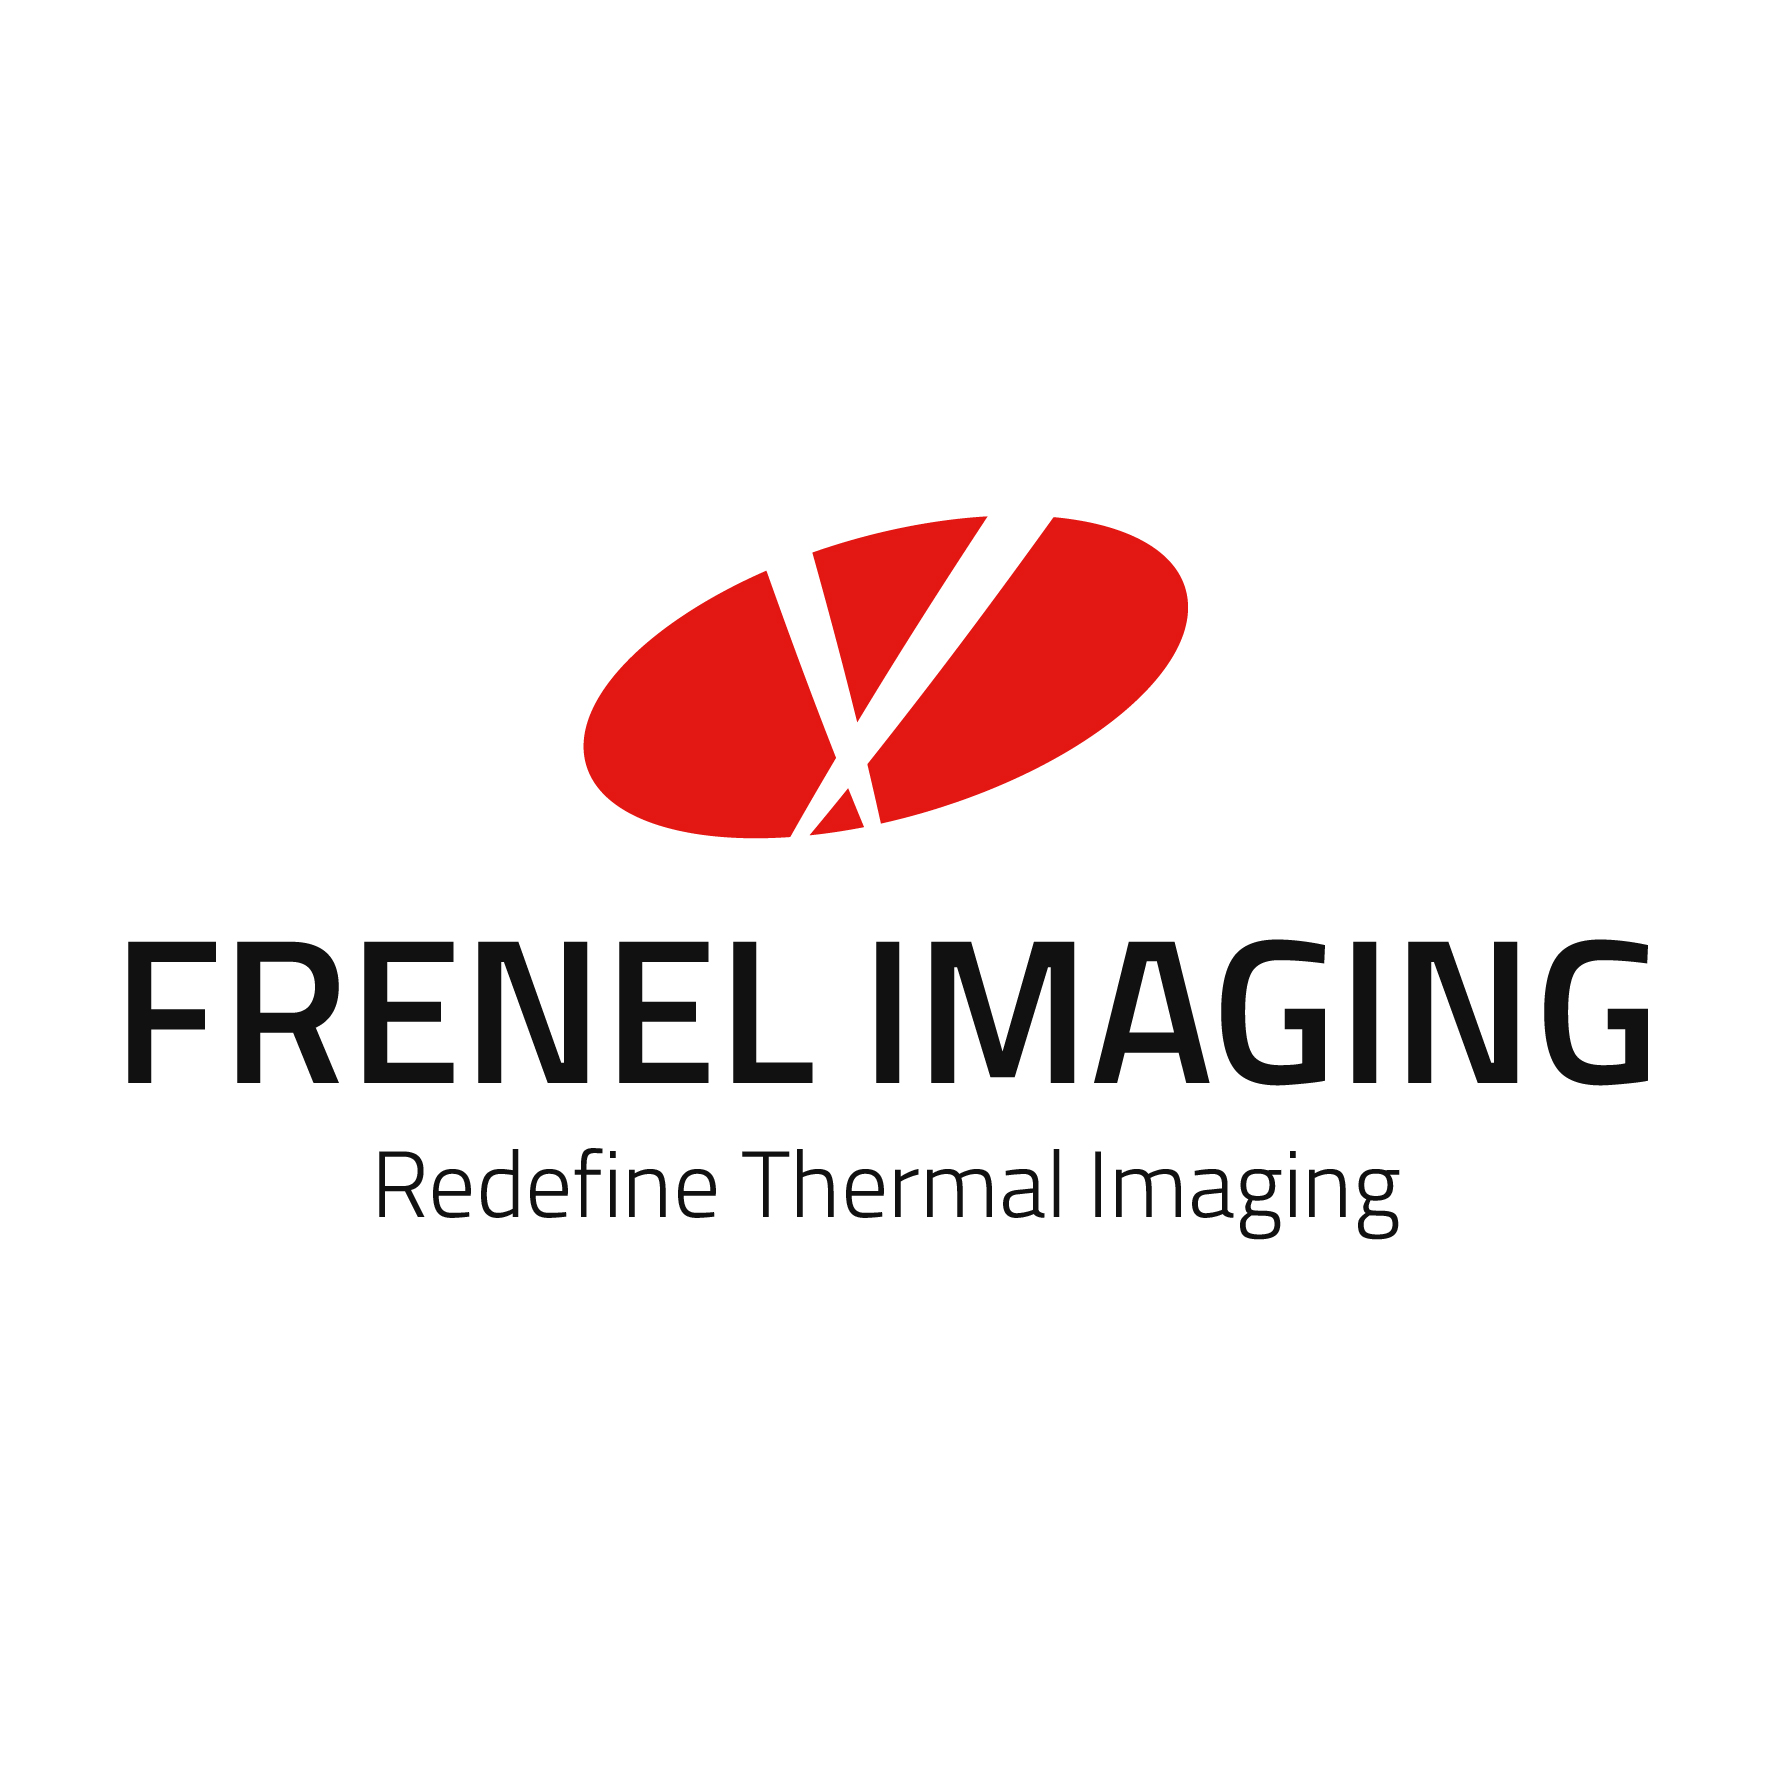 Frenel Imaging logo